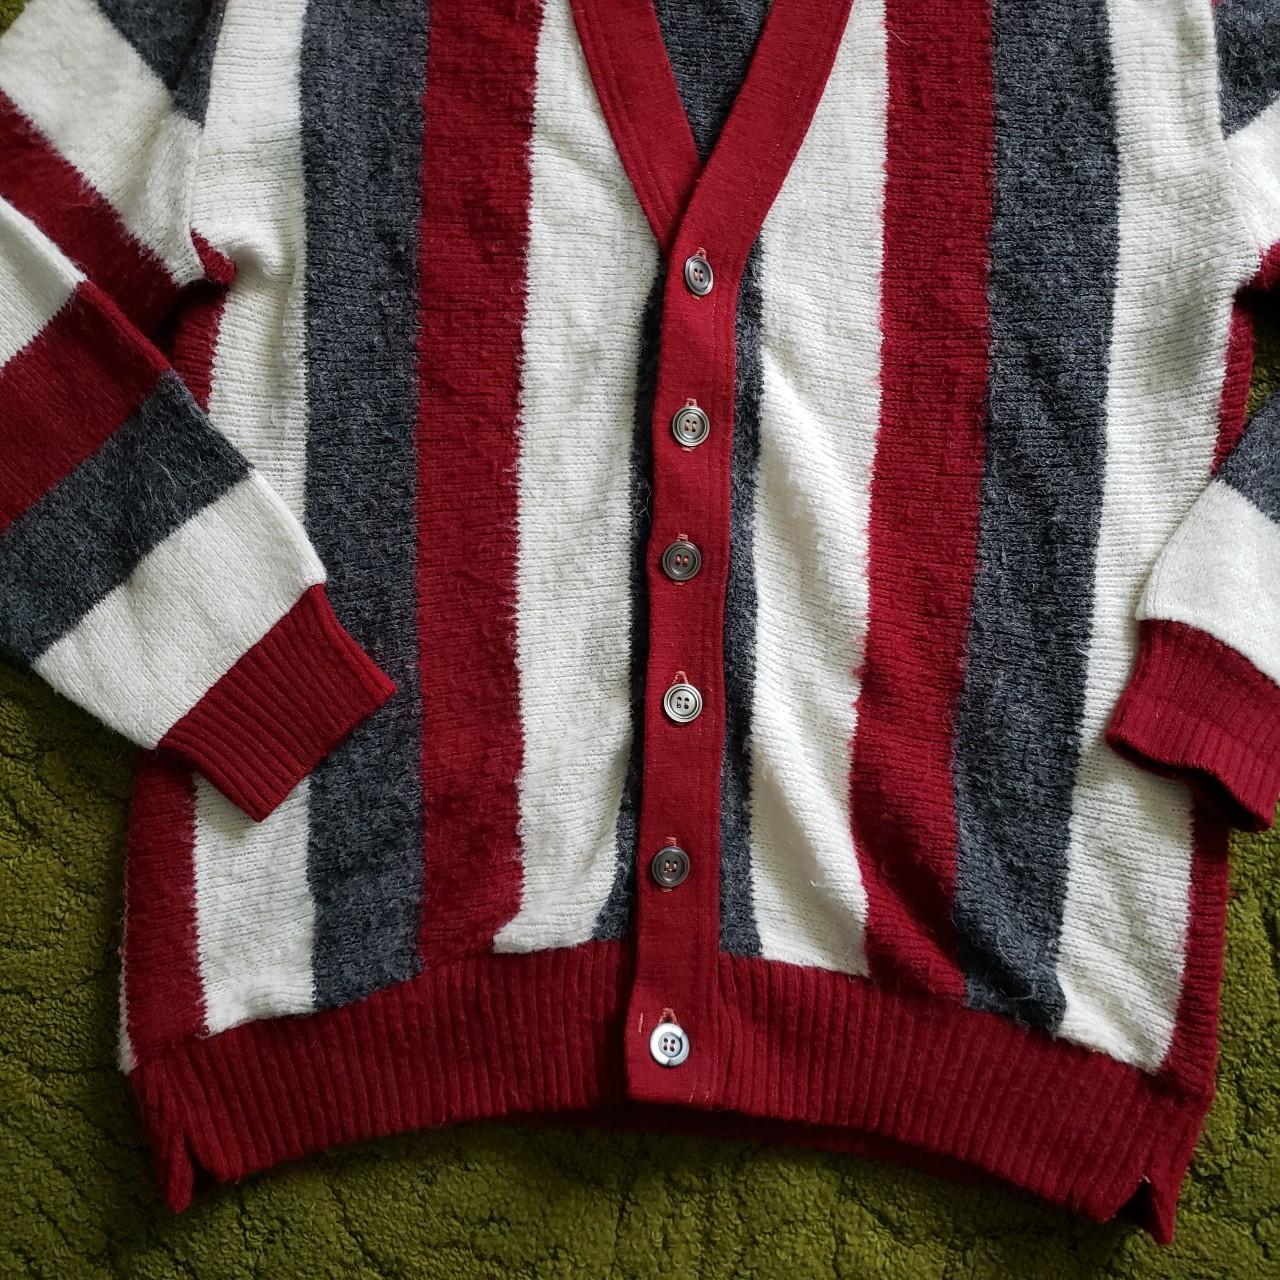 Vintage 50s/60s men's button down cardigan sweater.